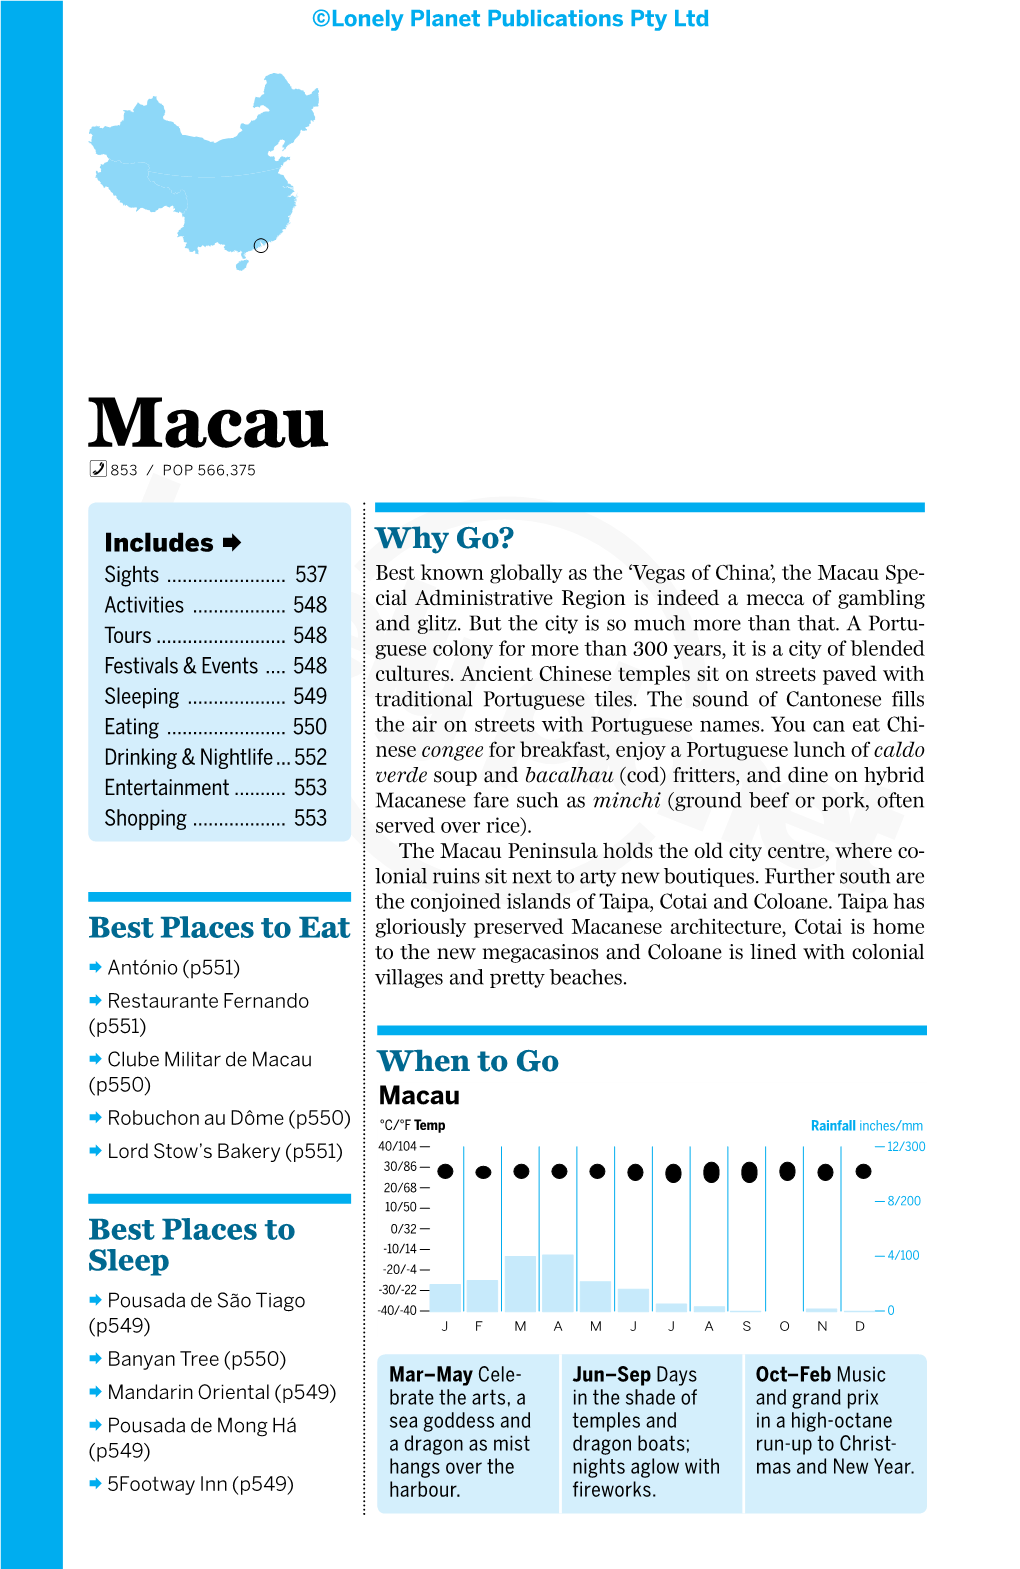 Macau% 853 / POP 566,375